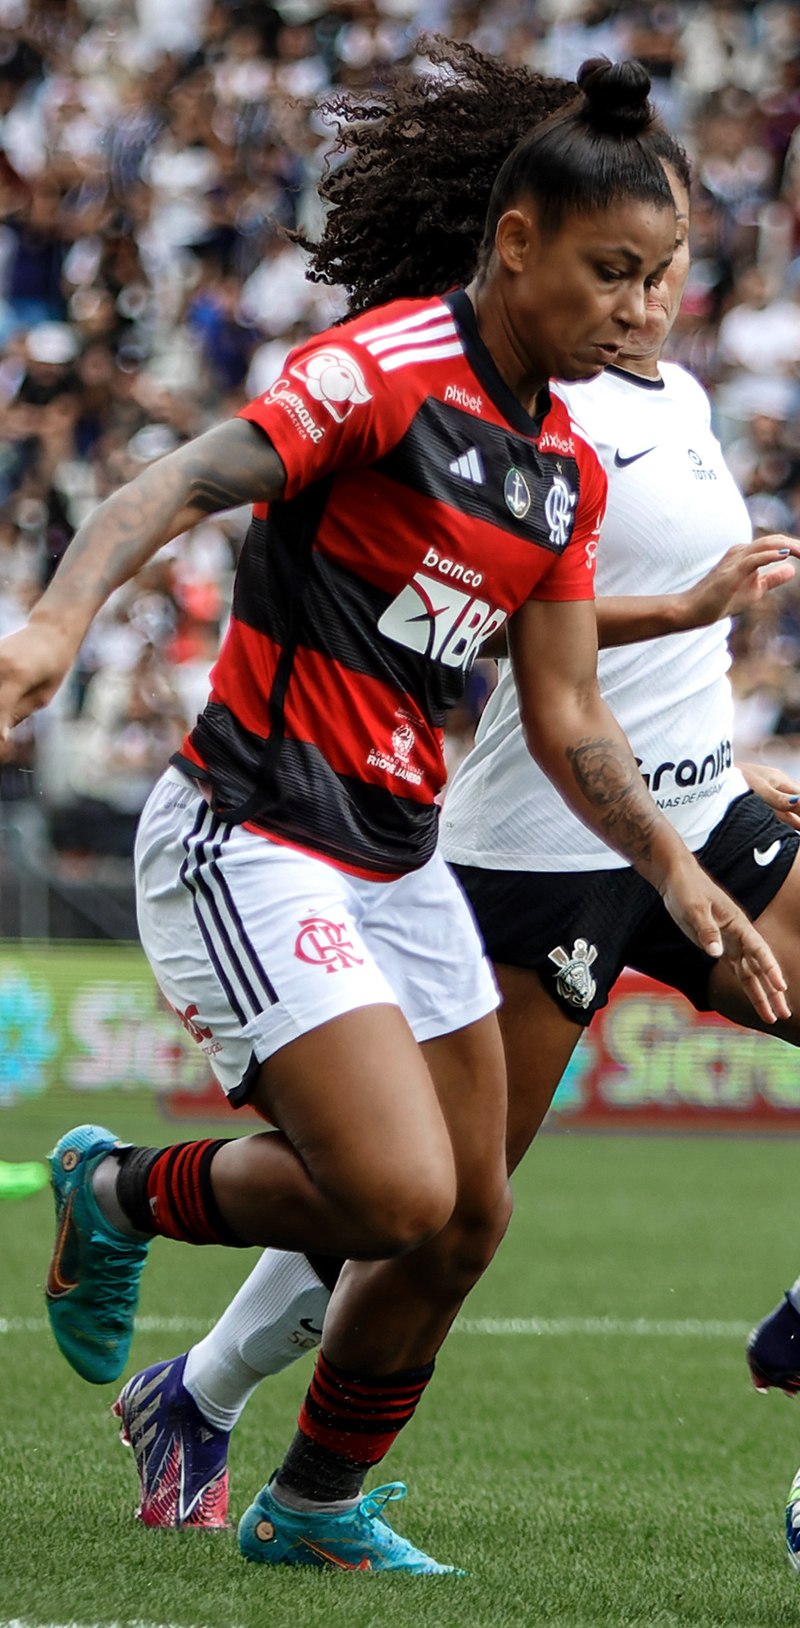 Maria Alves (footballer) - Wikipedia